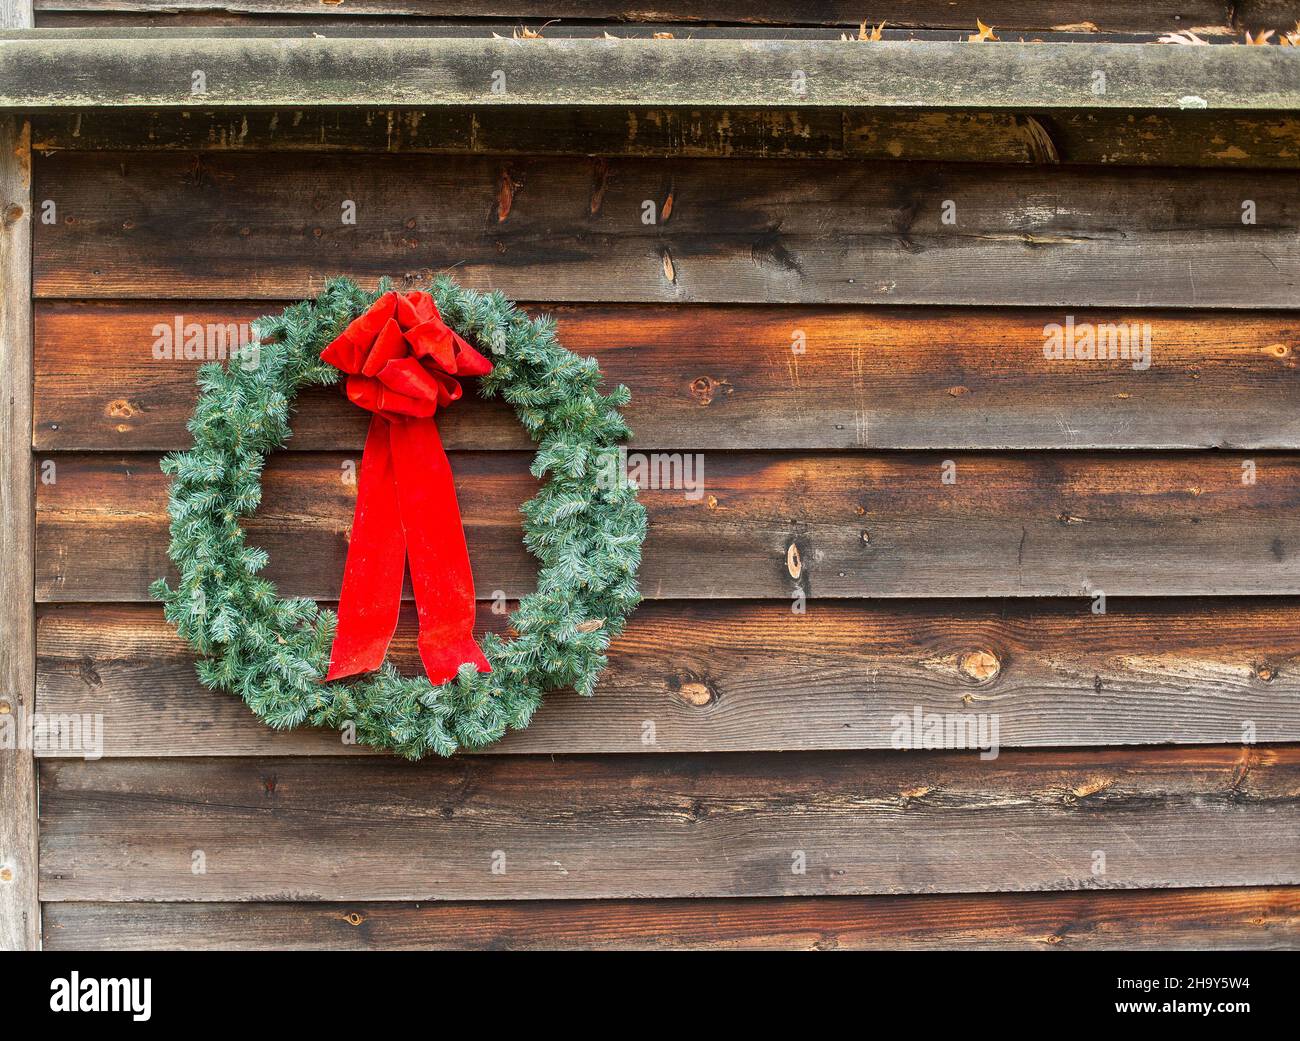 A Christmas wreath on a rustic barn wall Stock Photo